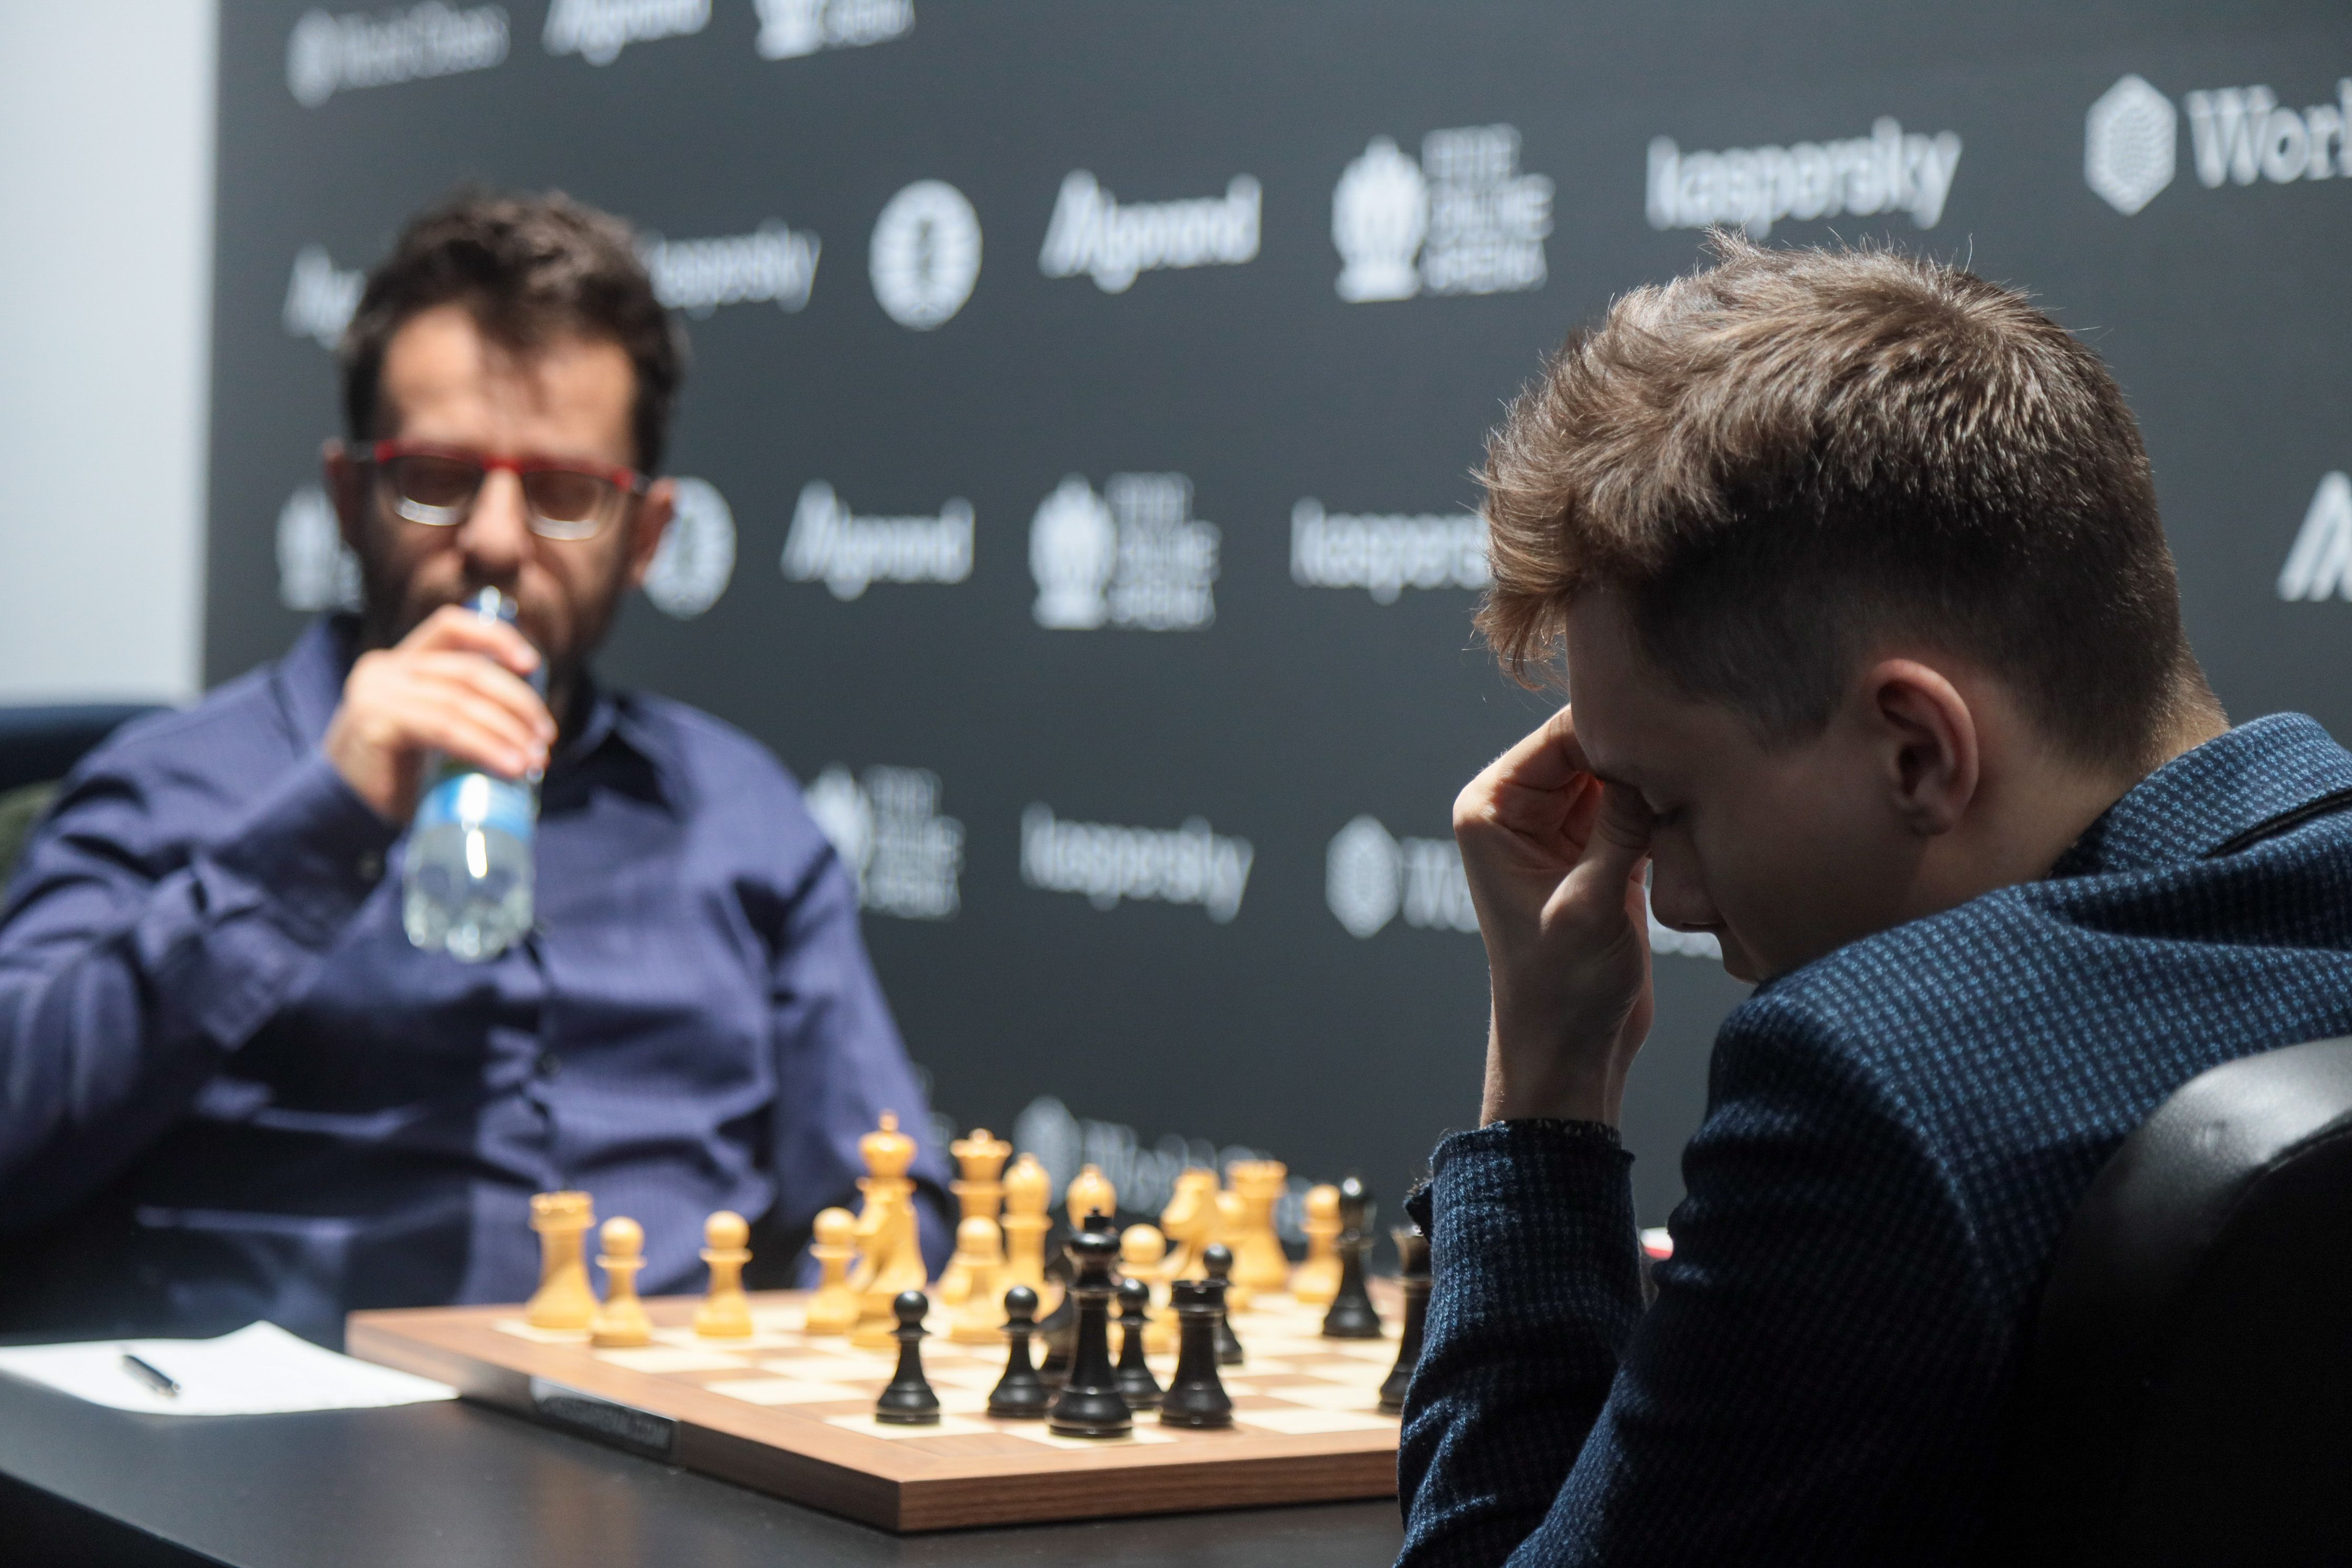 Aronian-Nakamura as final FIDE Grand Prix begins